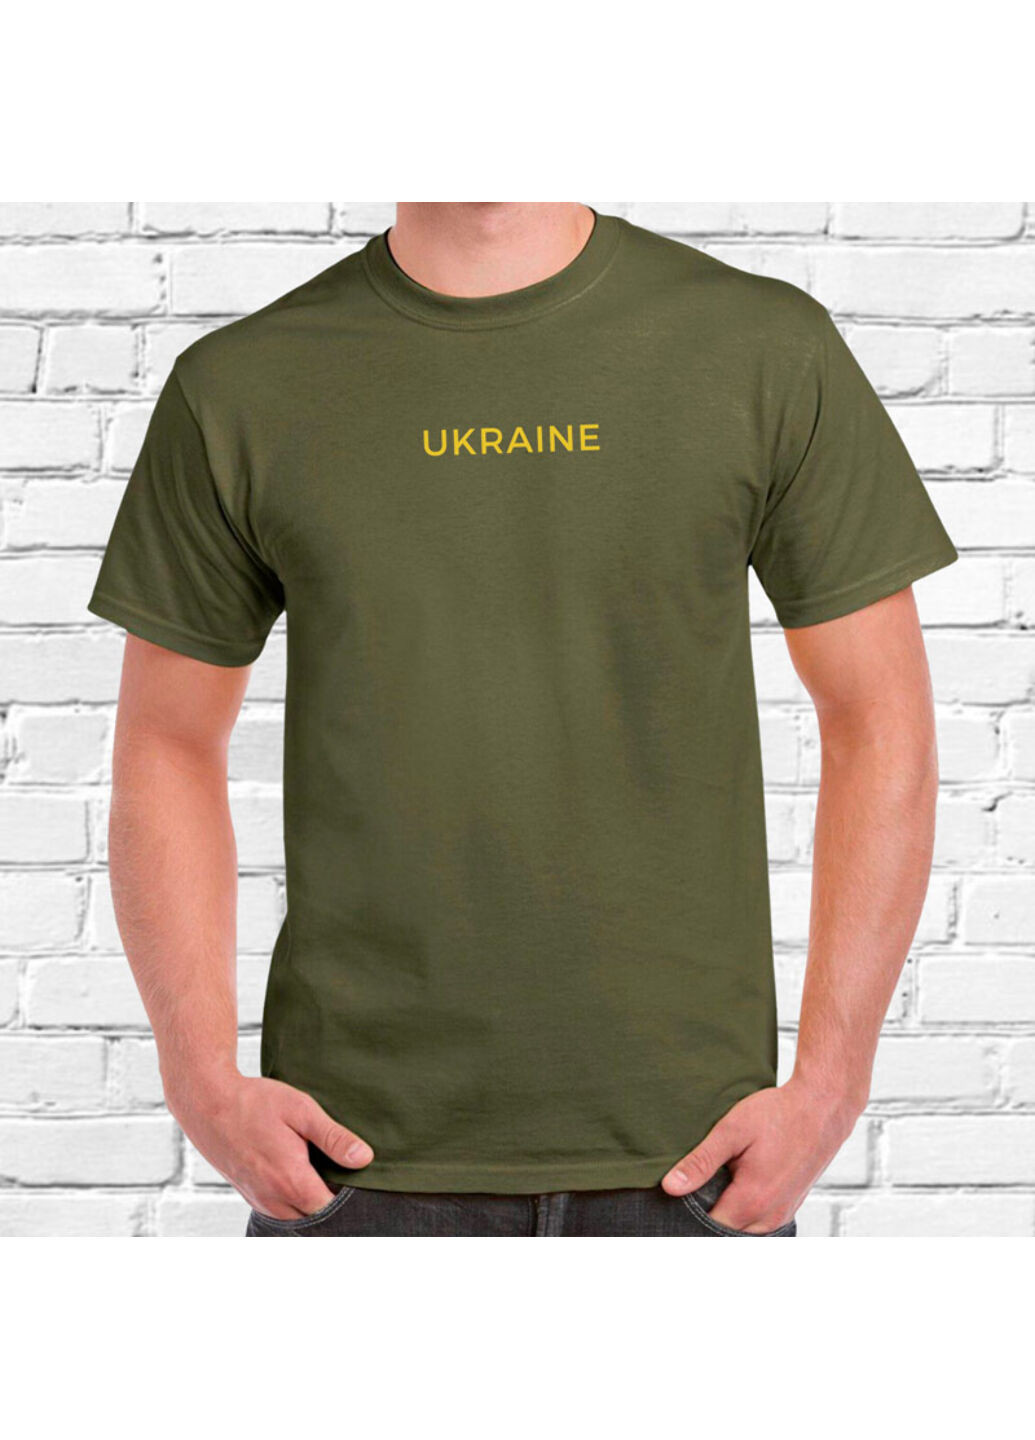 Хаки (оливковая) футболка з злотою вишивкою ukraine мужская хаки m No Brand